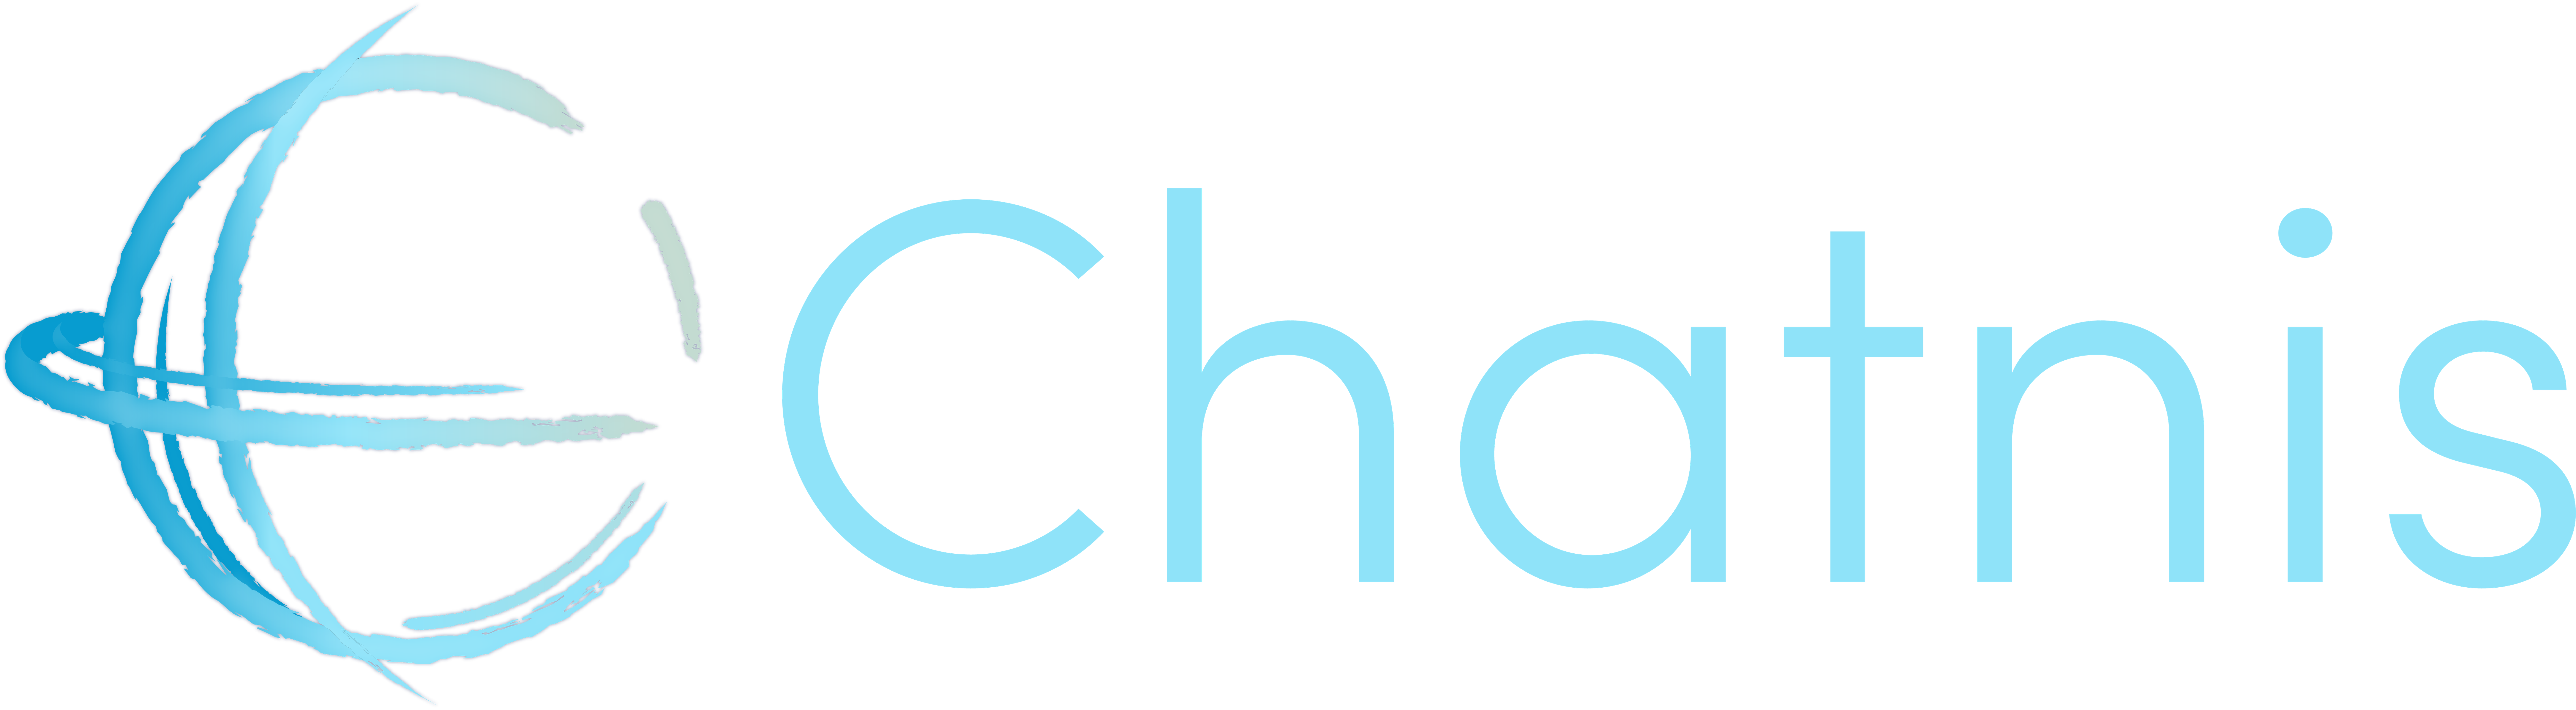 Chatnis Logo Files_website version